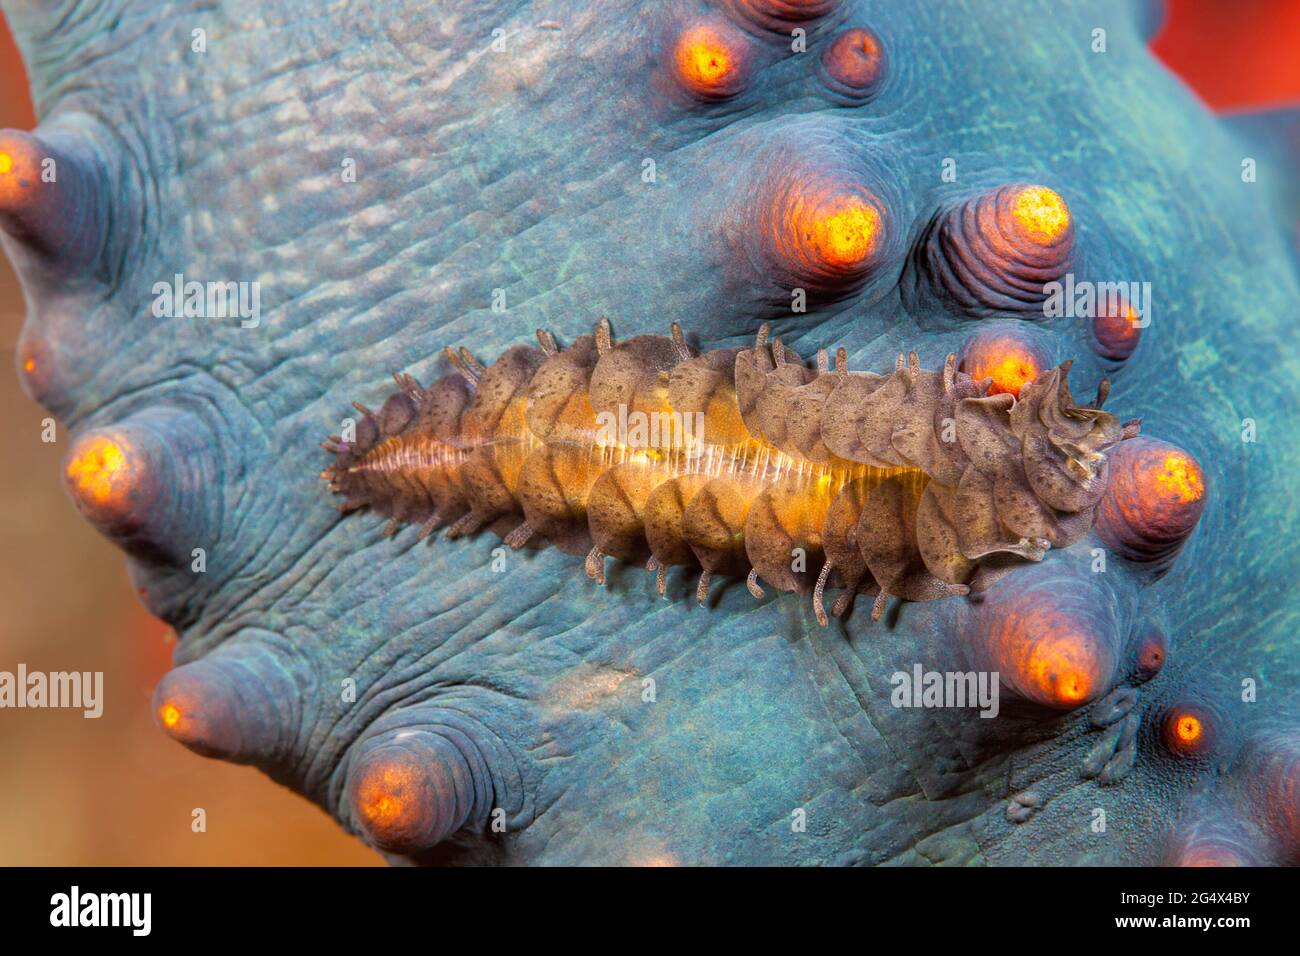 Sea cucumber scale worm, Gastrolepidia clavigera, crawling on its host holothurian, the black sea cucumber, Holothuria atra, Fiji. Stock Photo